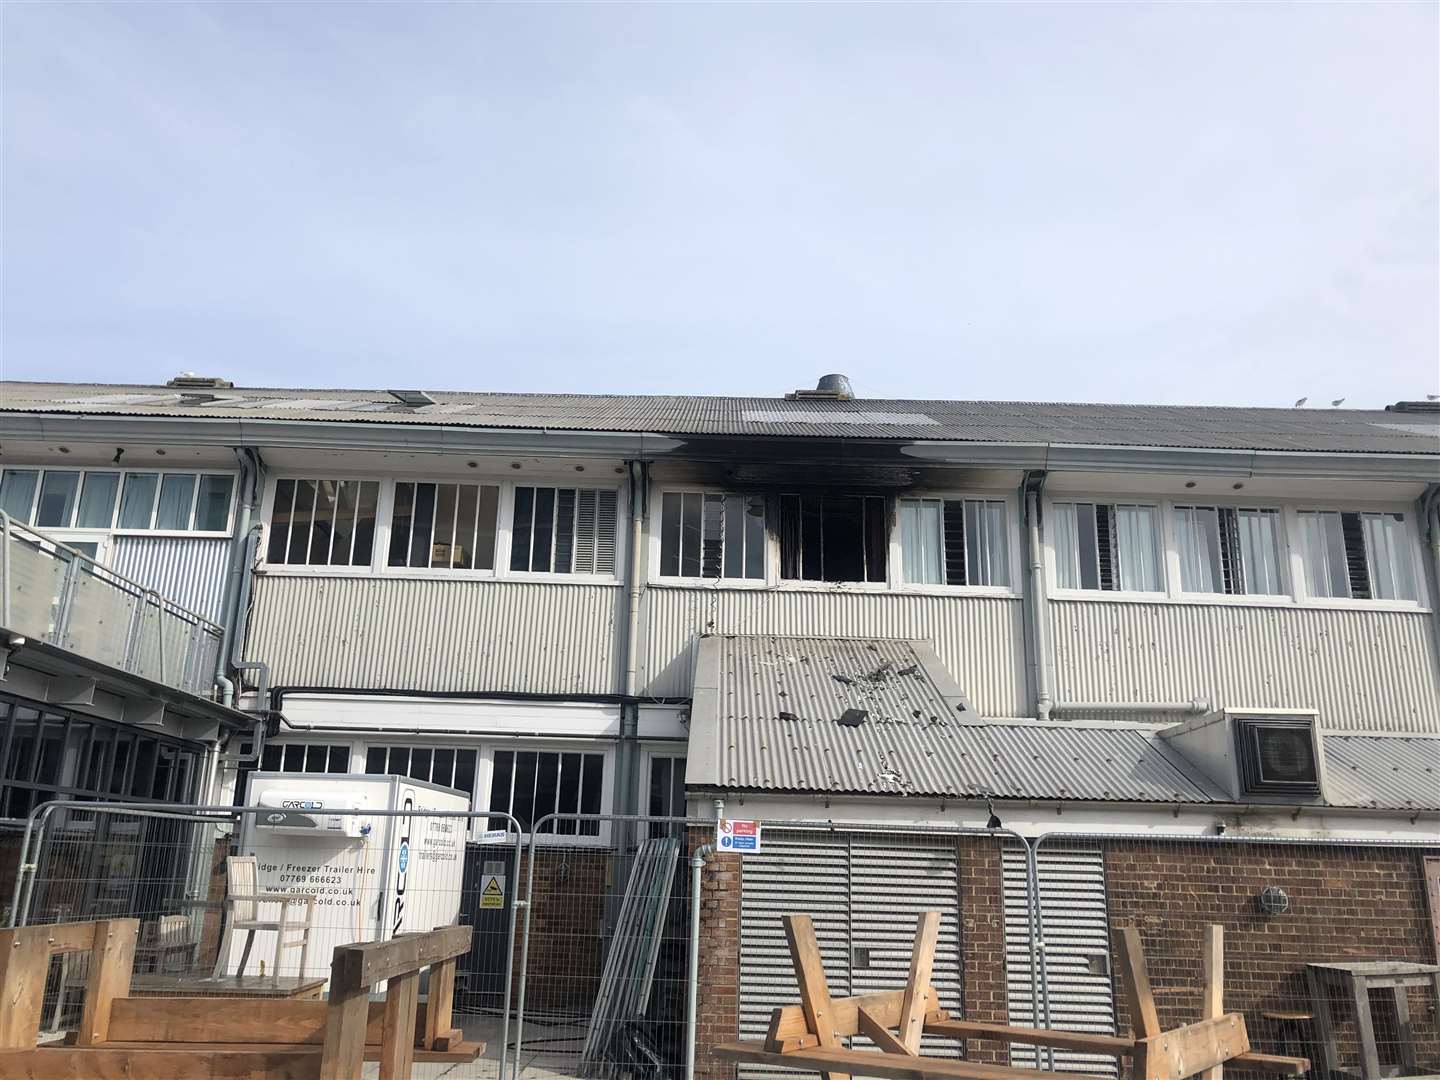 Fire damage at Ship and Trades pub